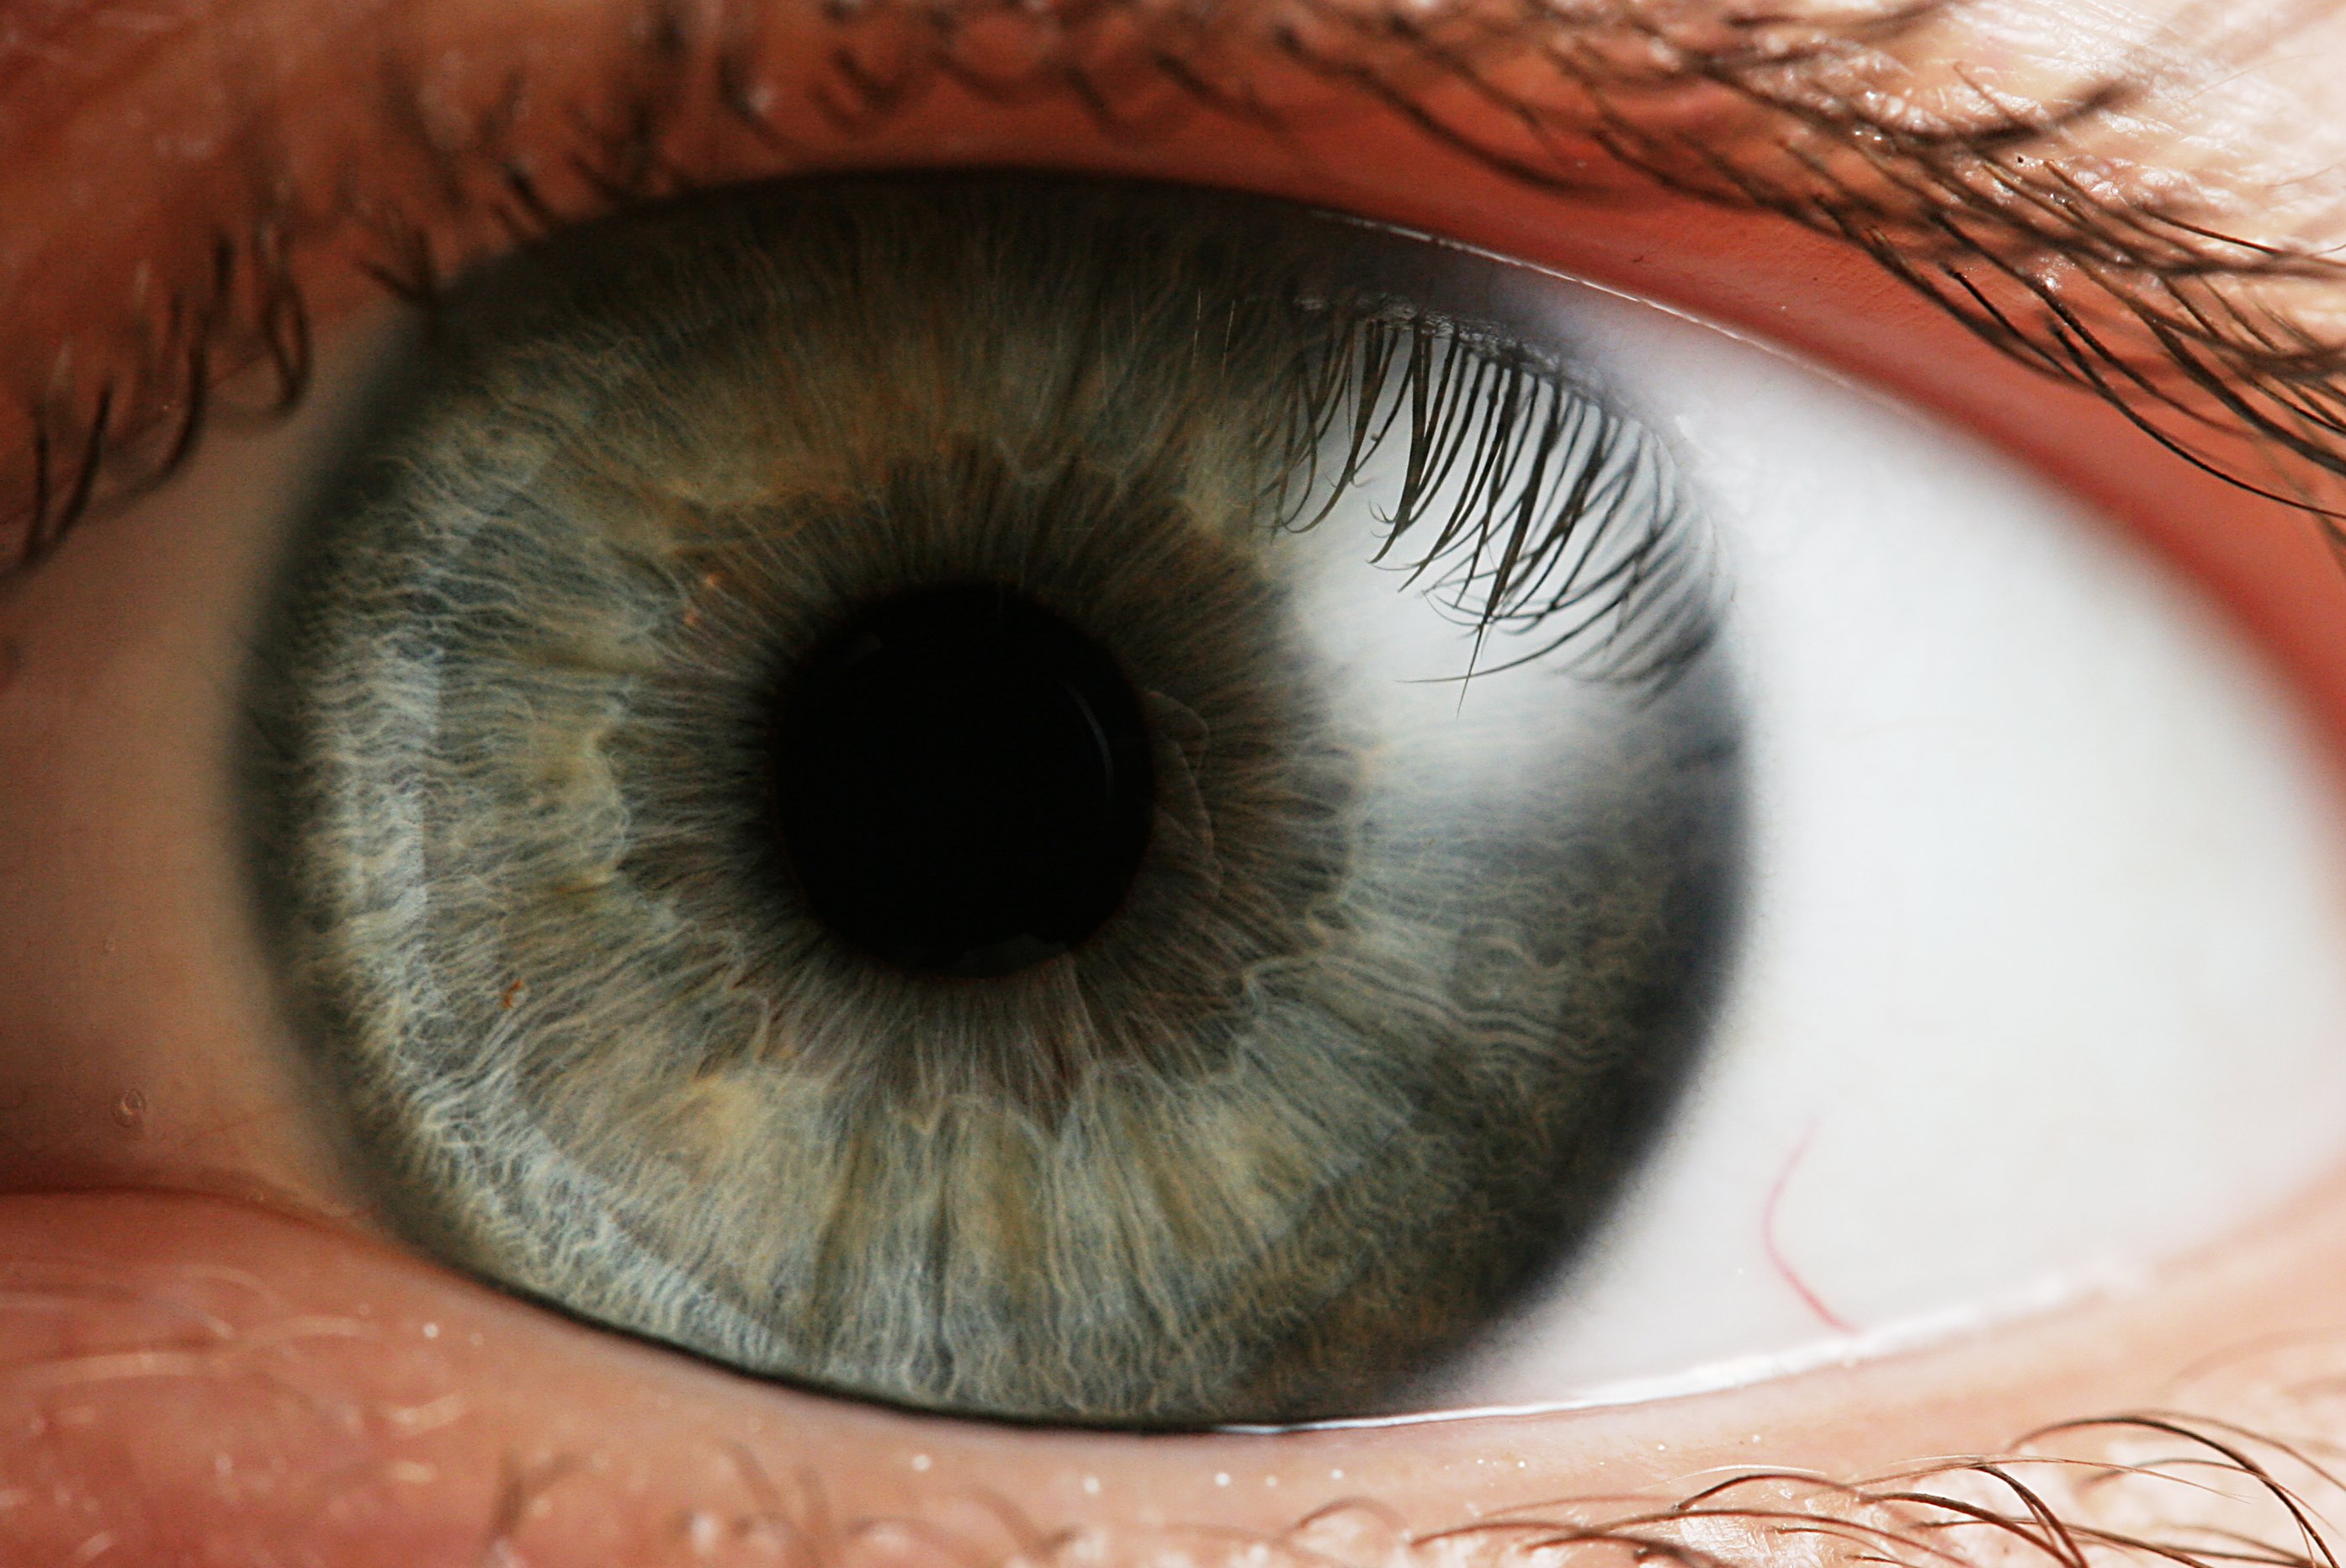 Eyeprint Biometrics